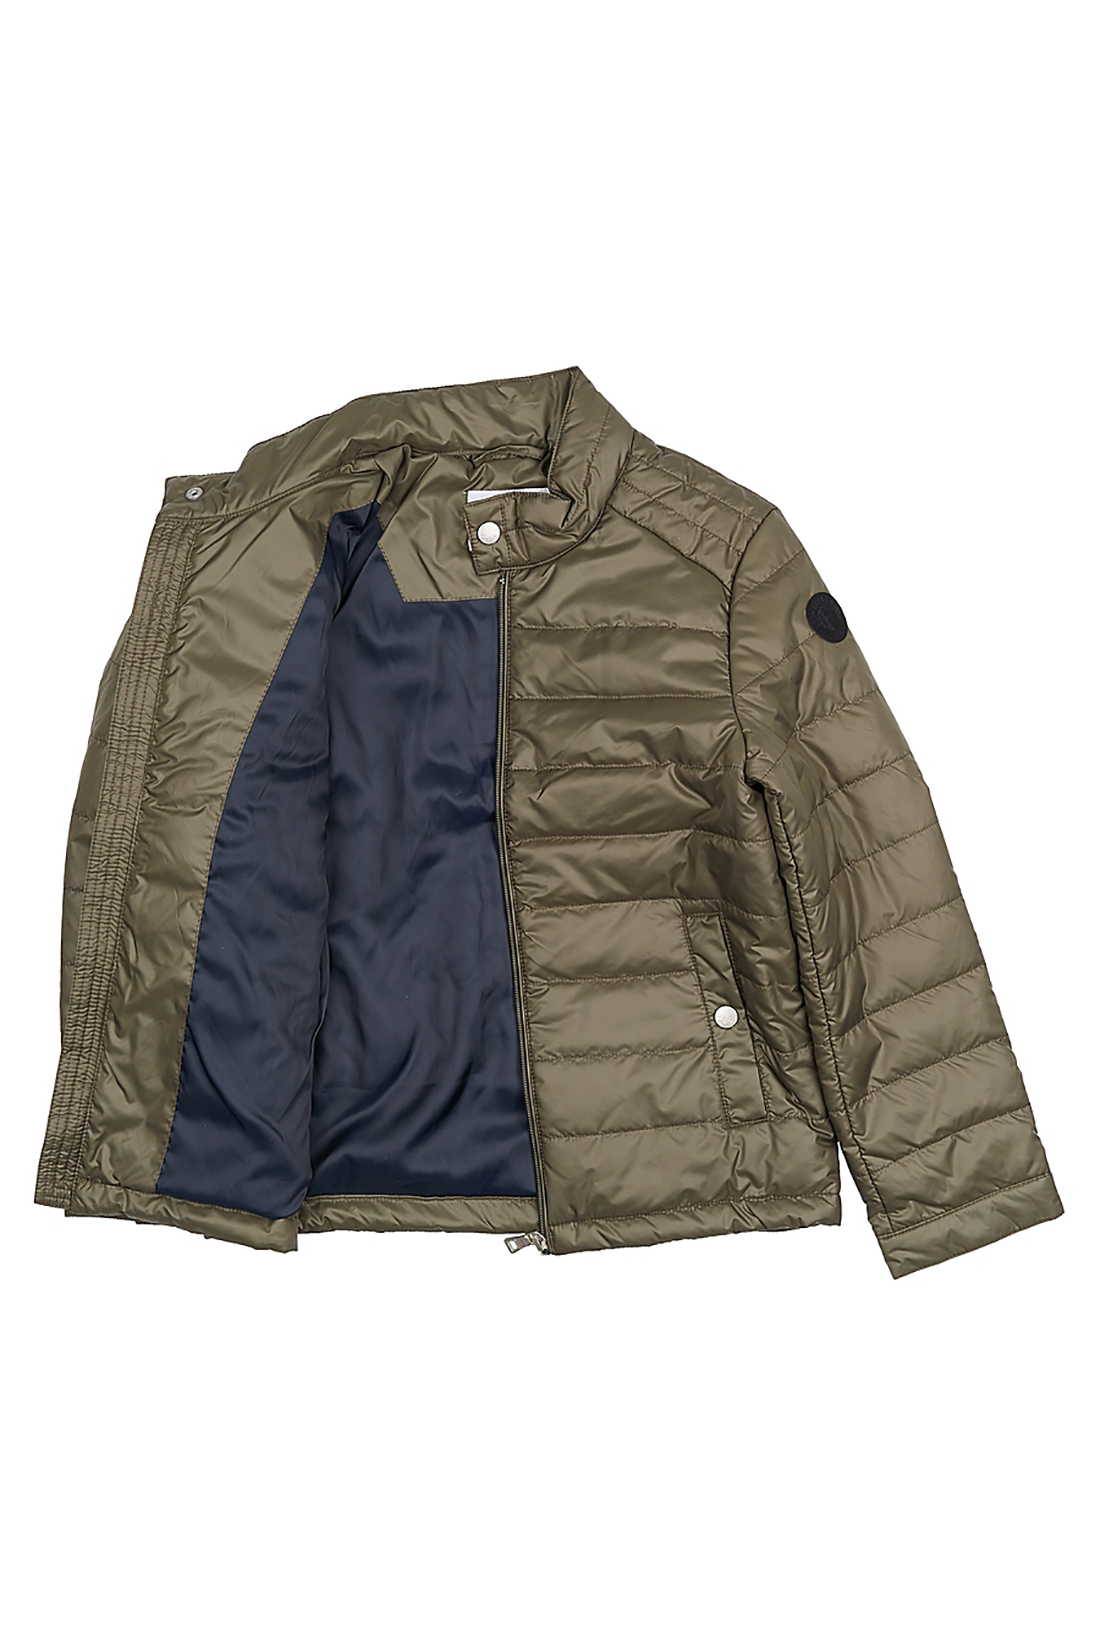 Куртка для мальчика (арт. baon BJ538002), размер 158-164, цвет зеленый Куртка для мальчика (арт. baon BJ538002) - фото 3